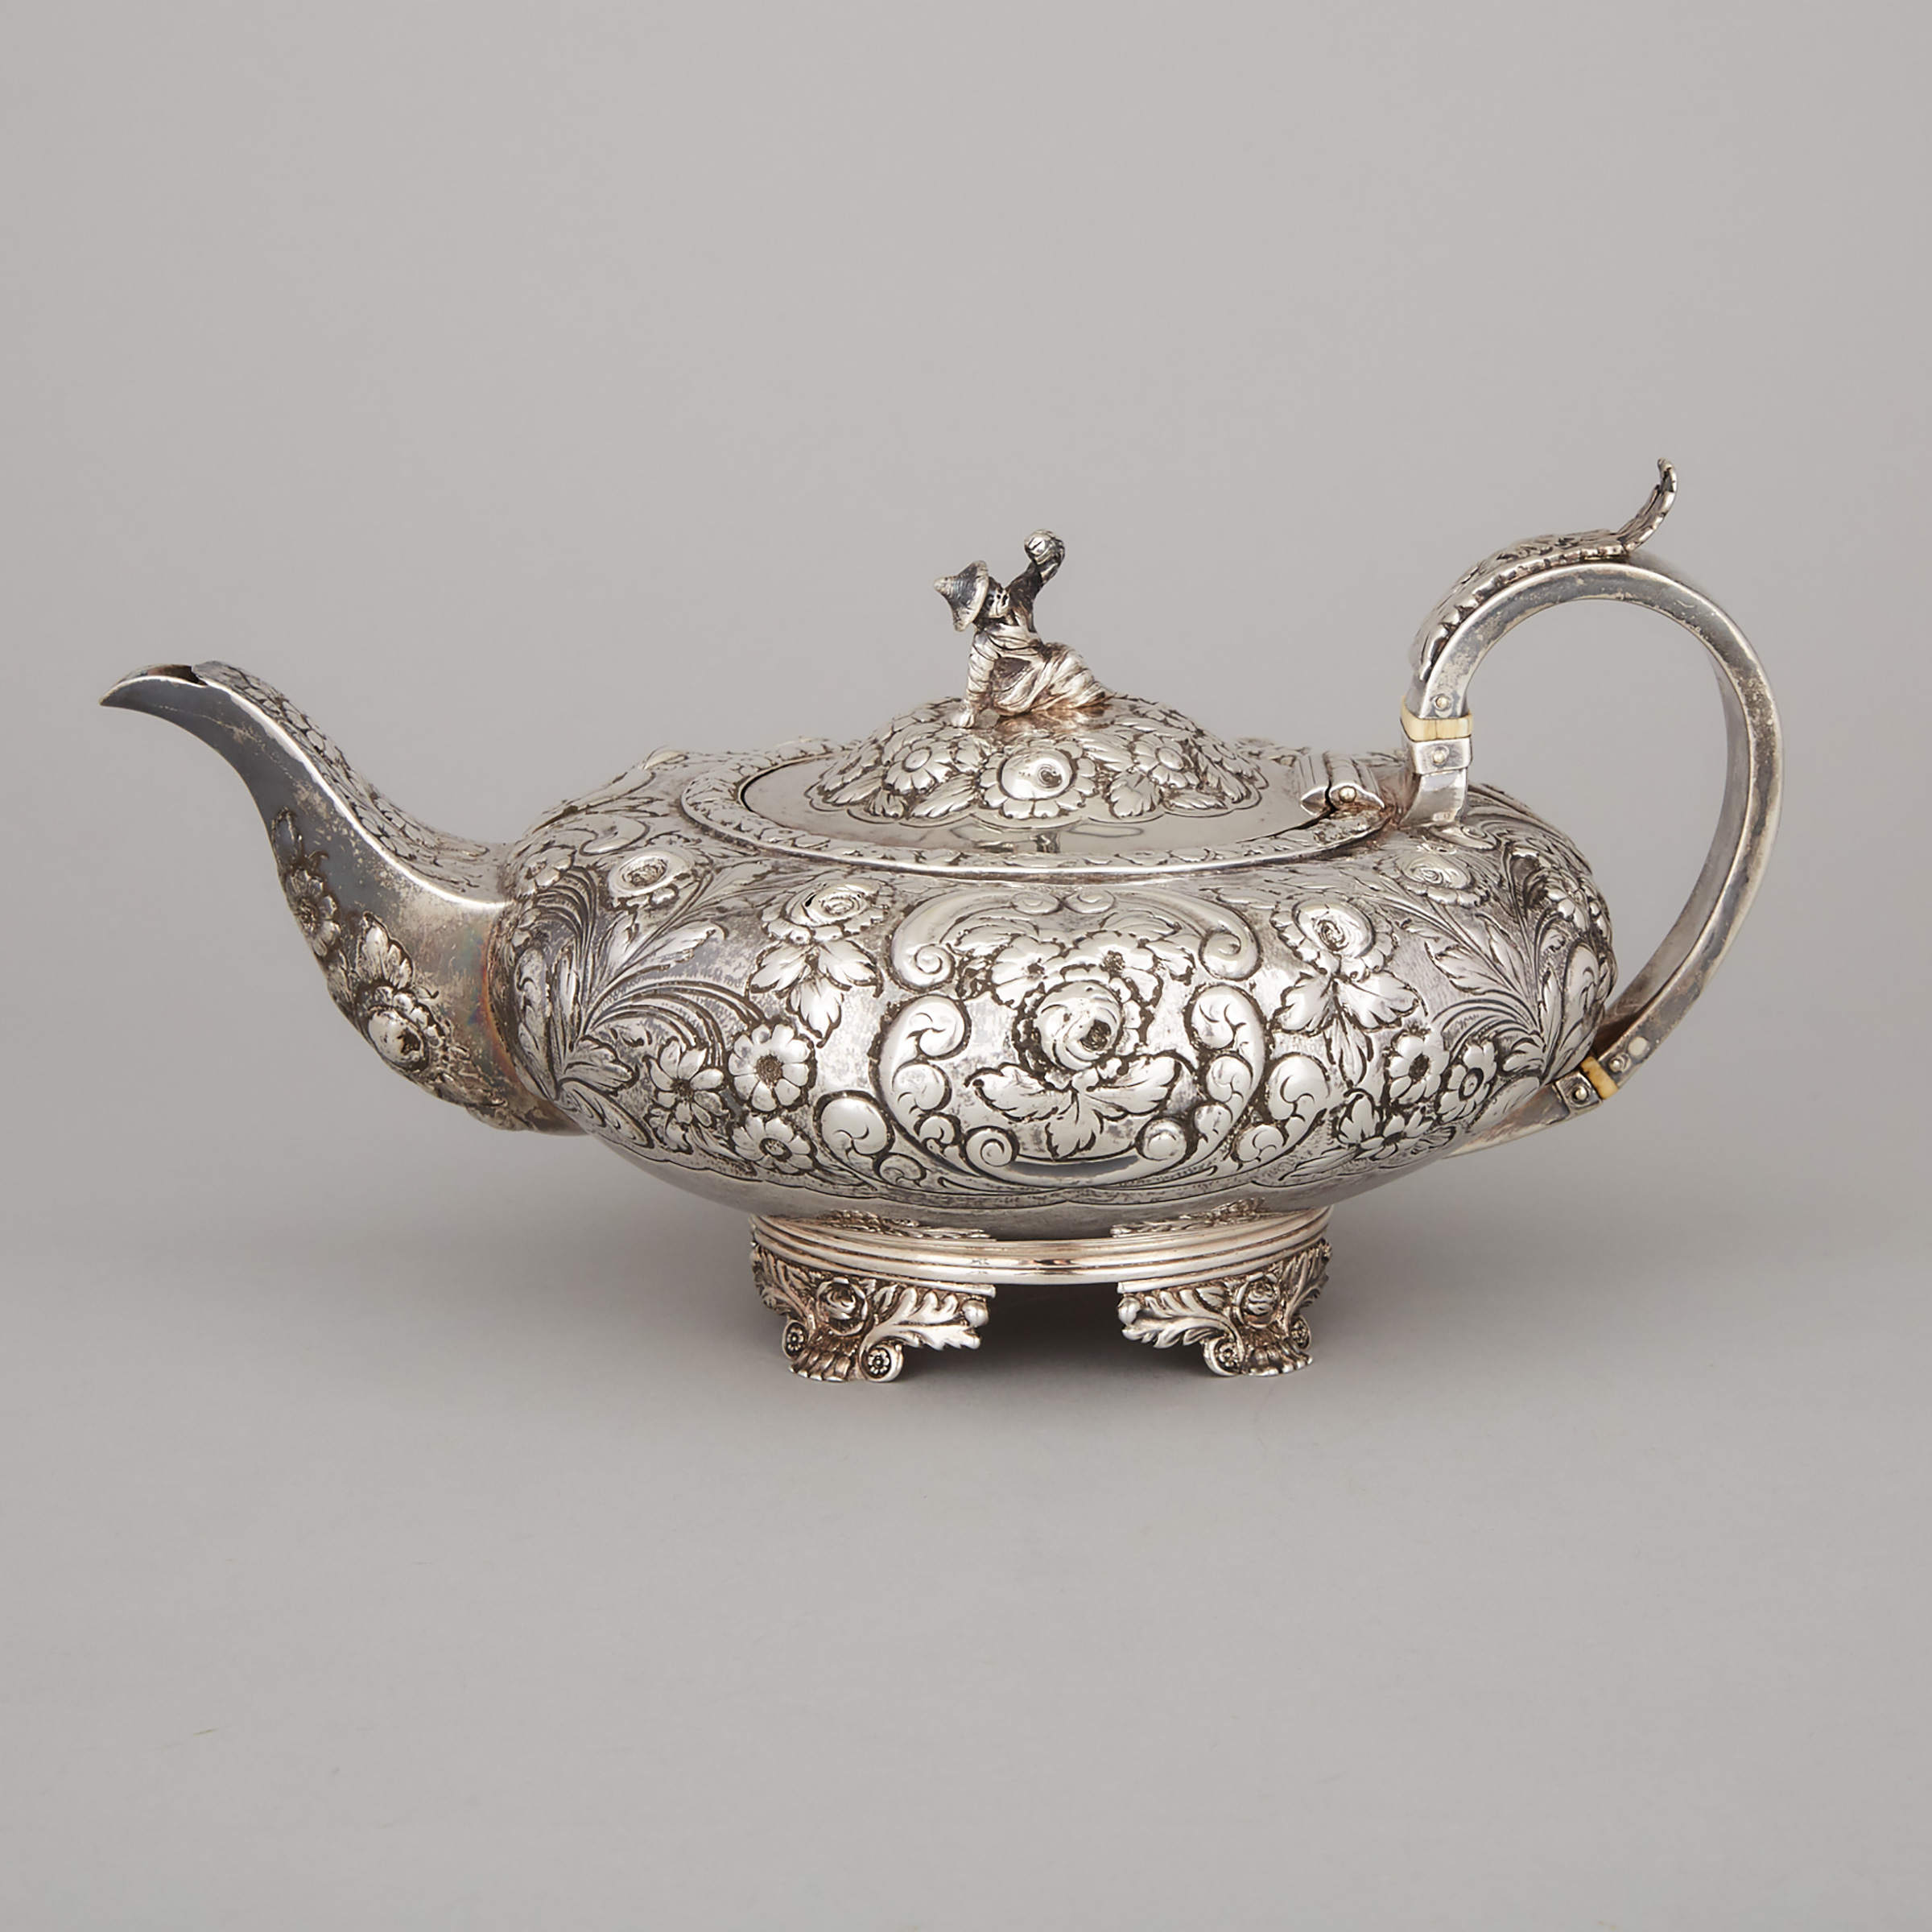 George IV Silver Teapot, Thomas Dicks, London, 1822